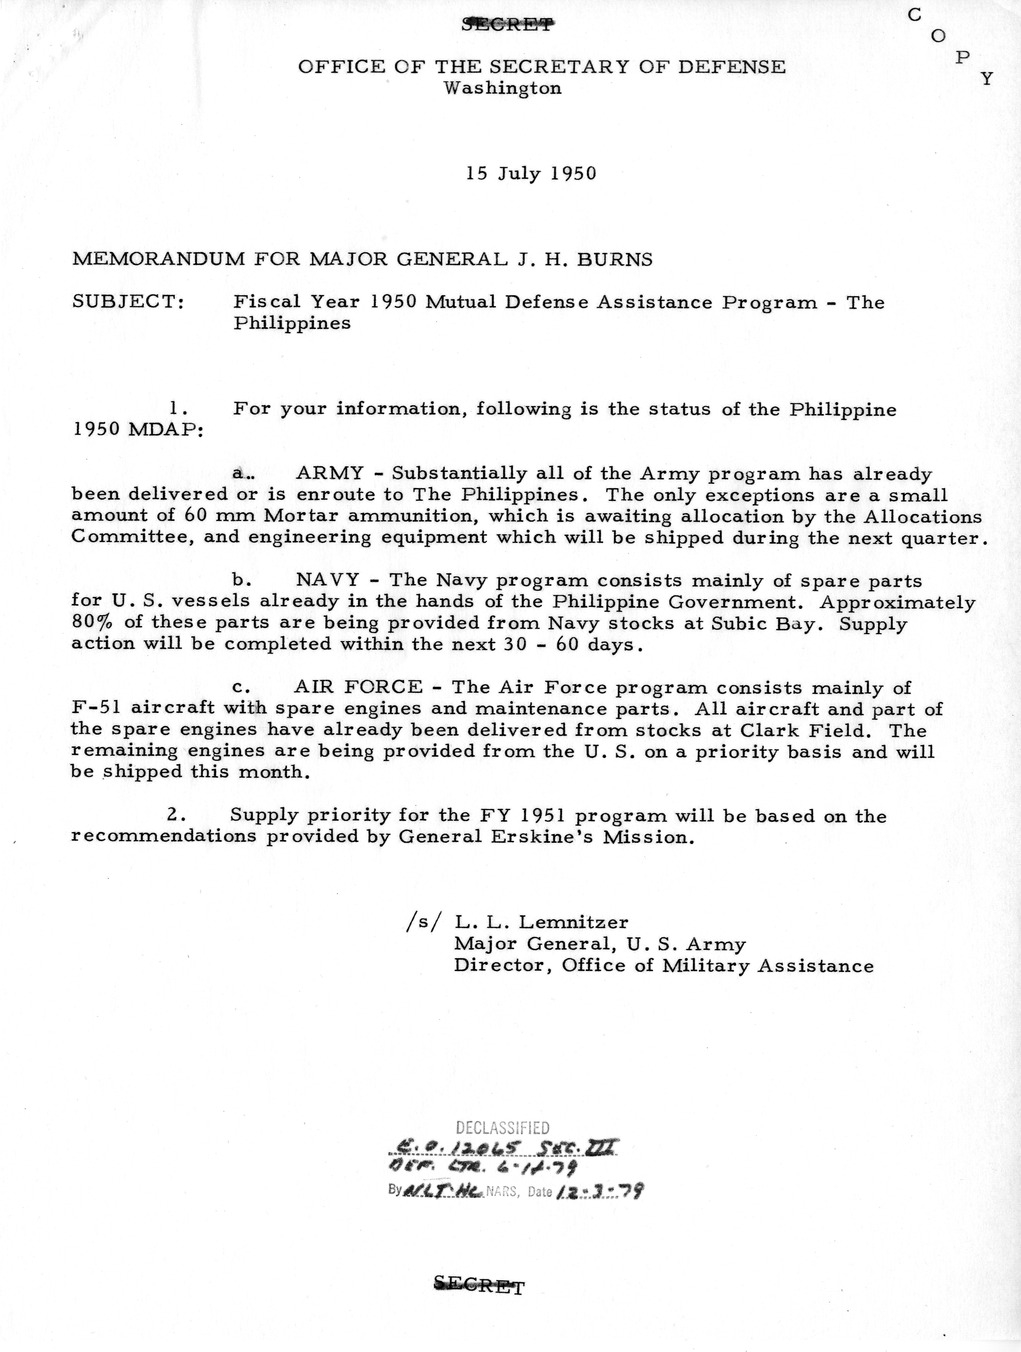 Memorandum from President Harry S. Truman to Secretary of Defense Louis Johnson